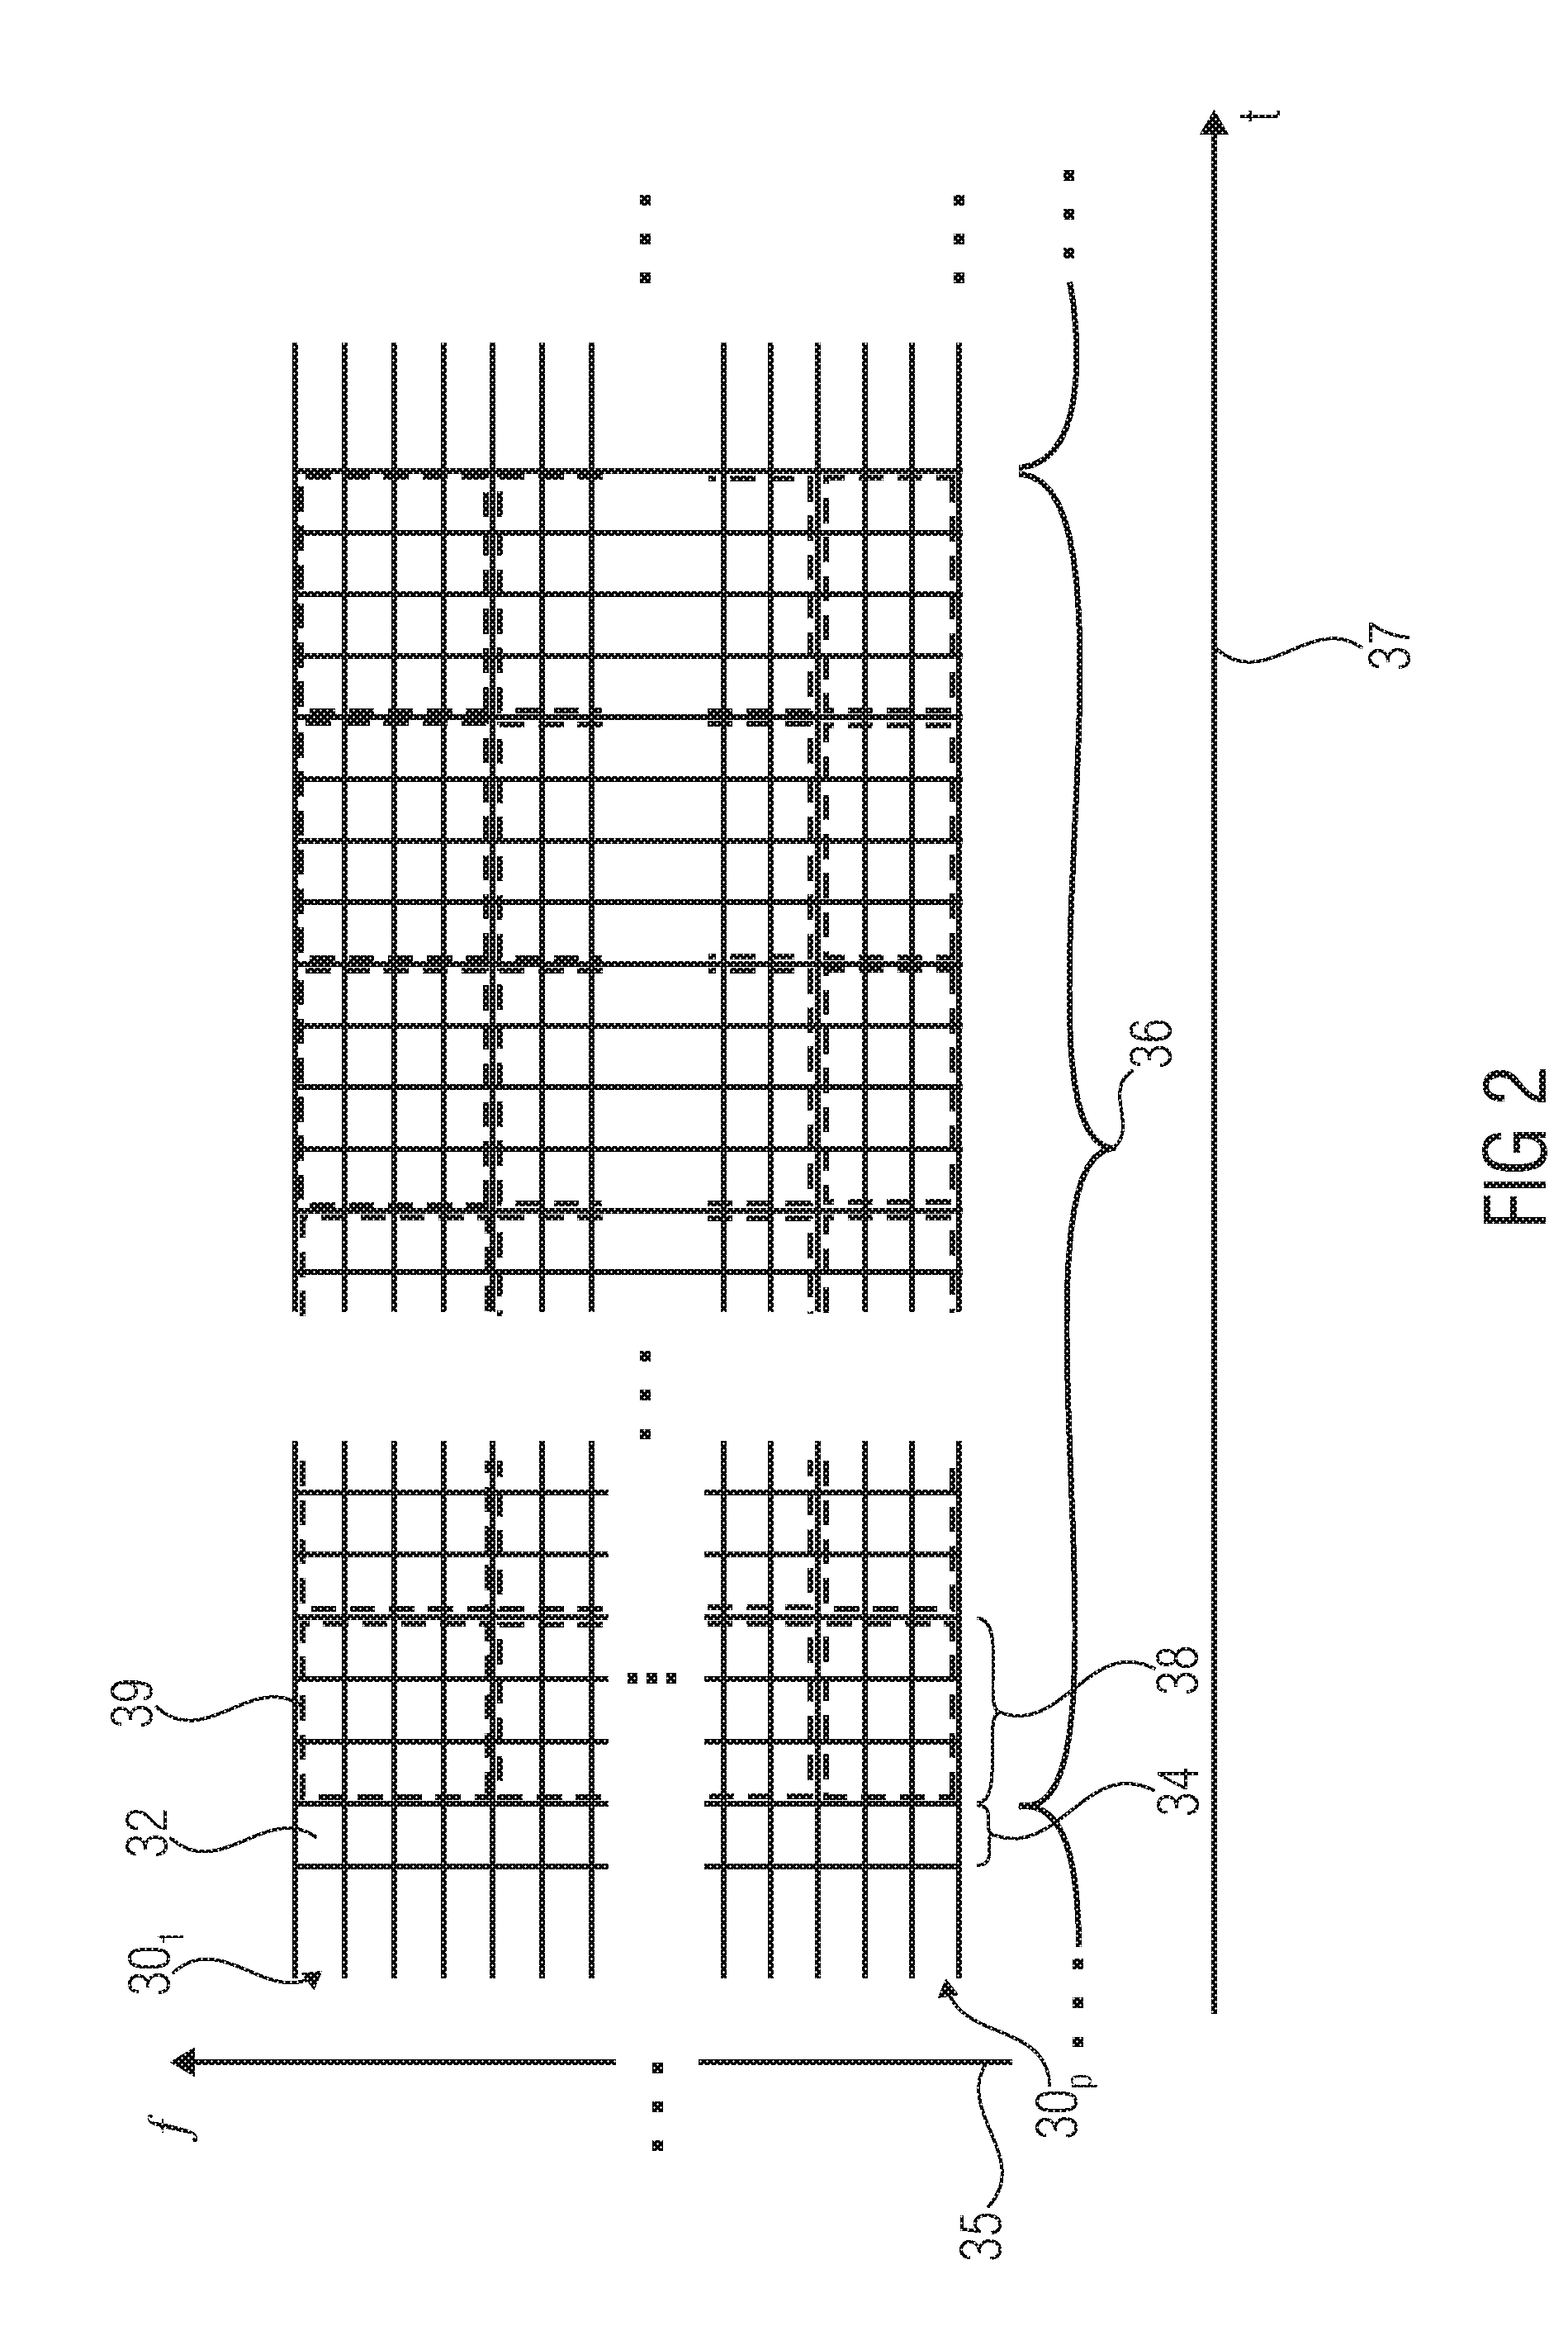 Binaural rendering of a multi-channel audio signal